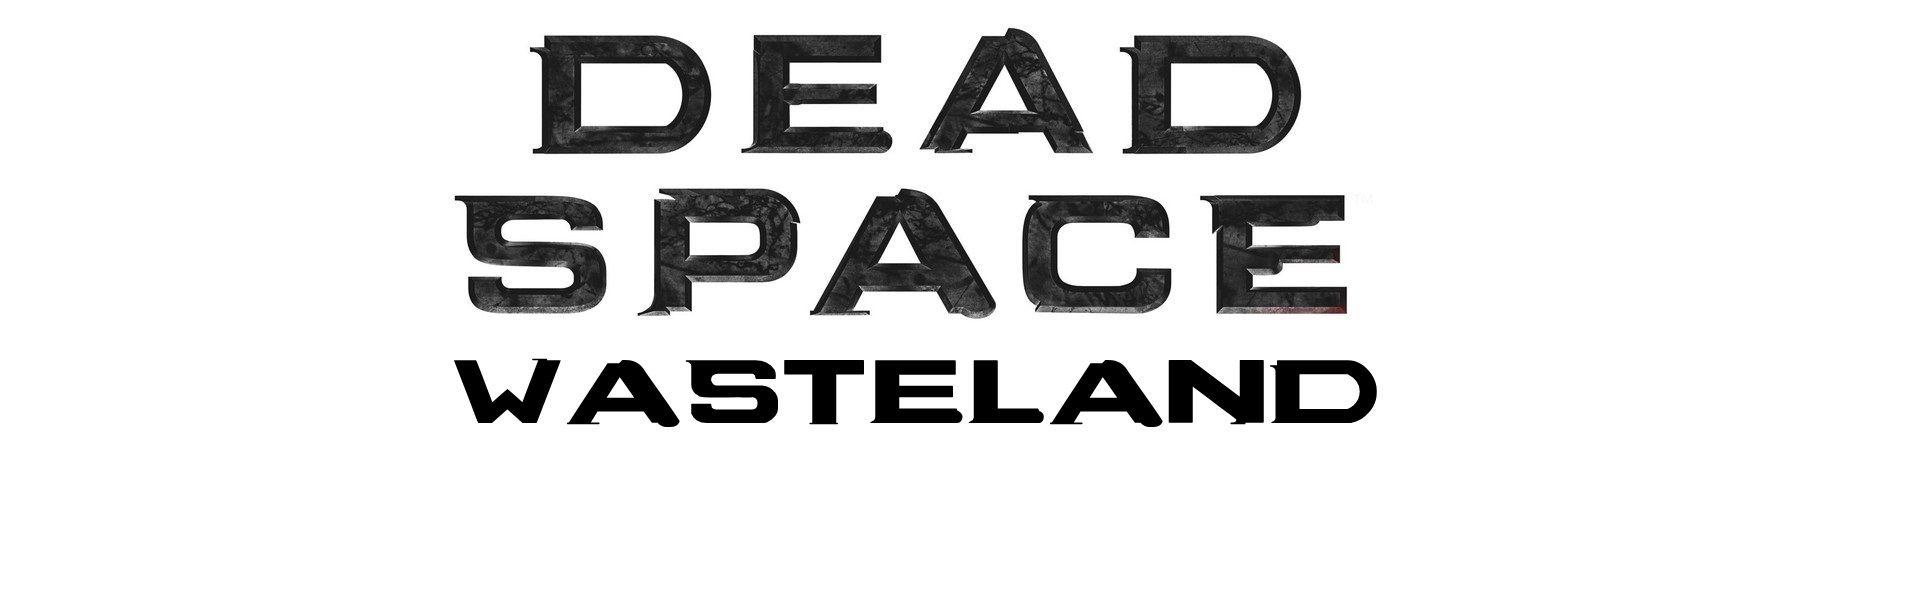 Dead Space Logo - User Blog:The Spy1 Dead Space 3 Prequel